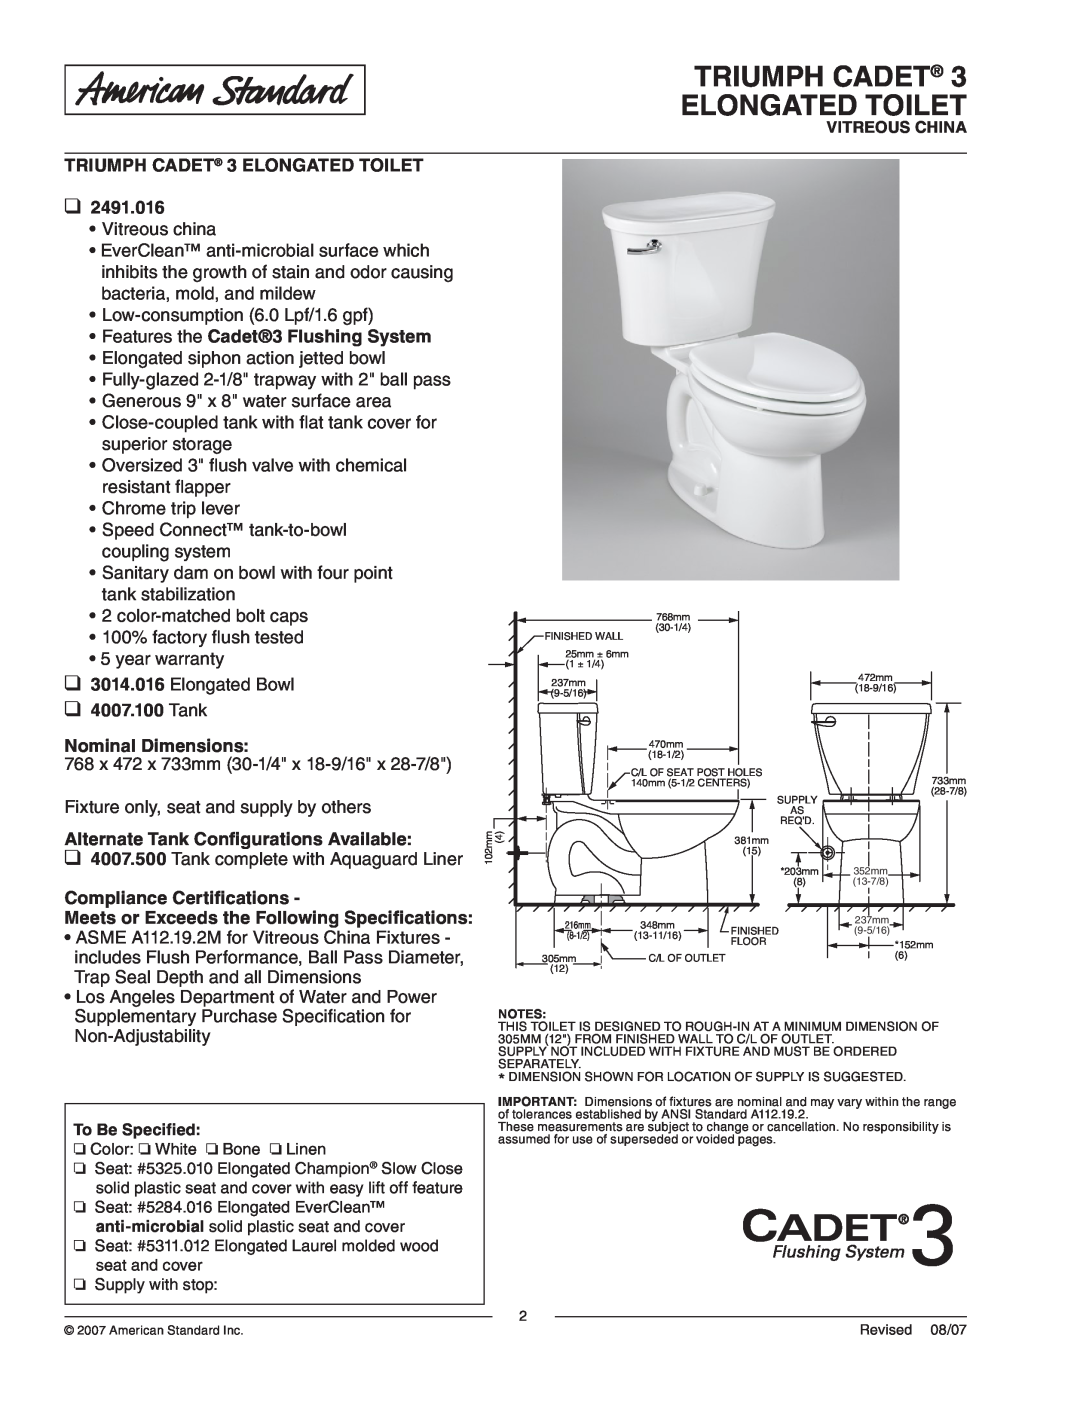 American Standard 2491.016, 4007.100 dimensions Triumph Cadet Elongated Toilet, TRIUMPH CADET 3 ELONGATED TOILET 